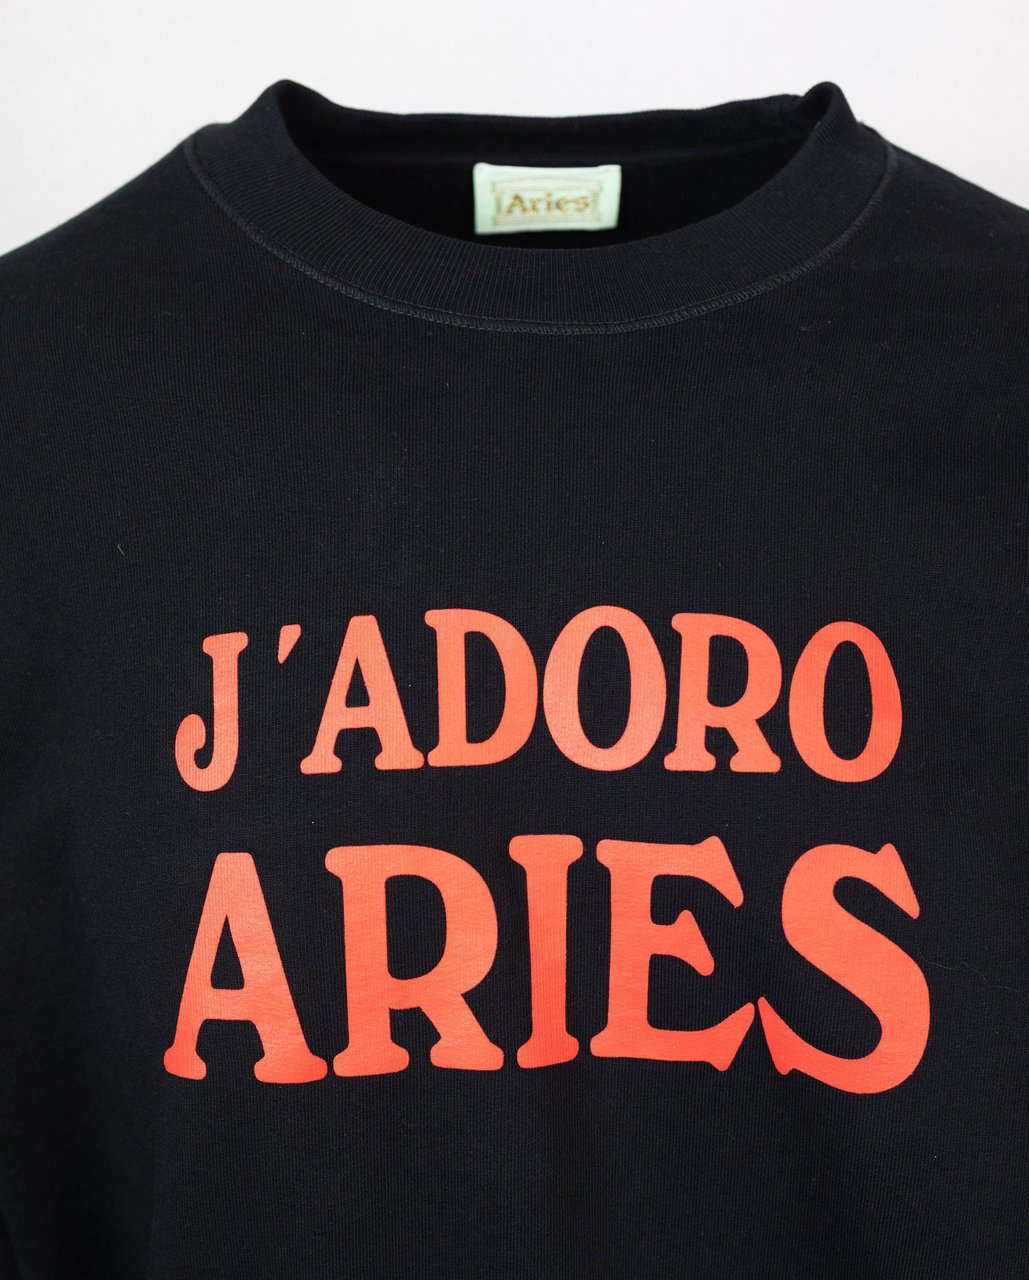 Aries Aries Sweaters Black Zwart